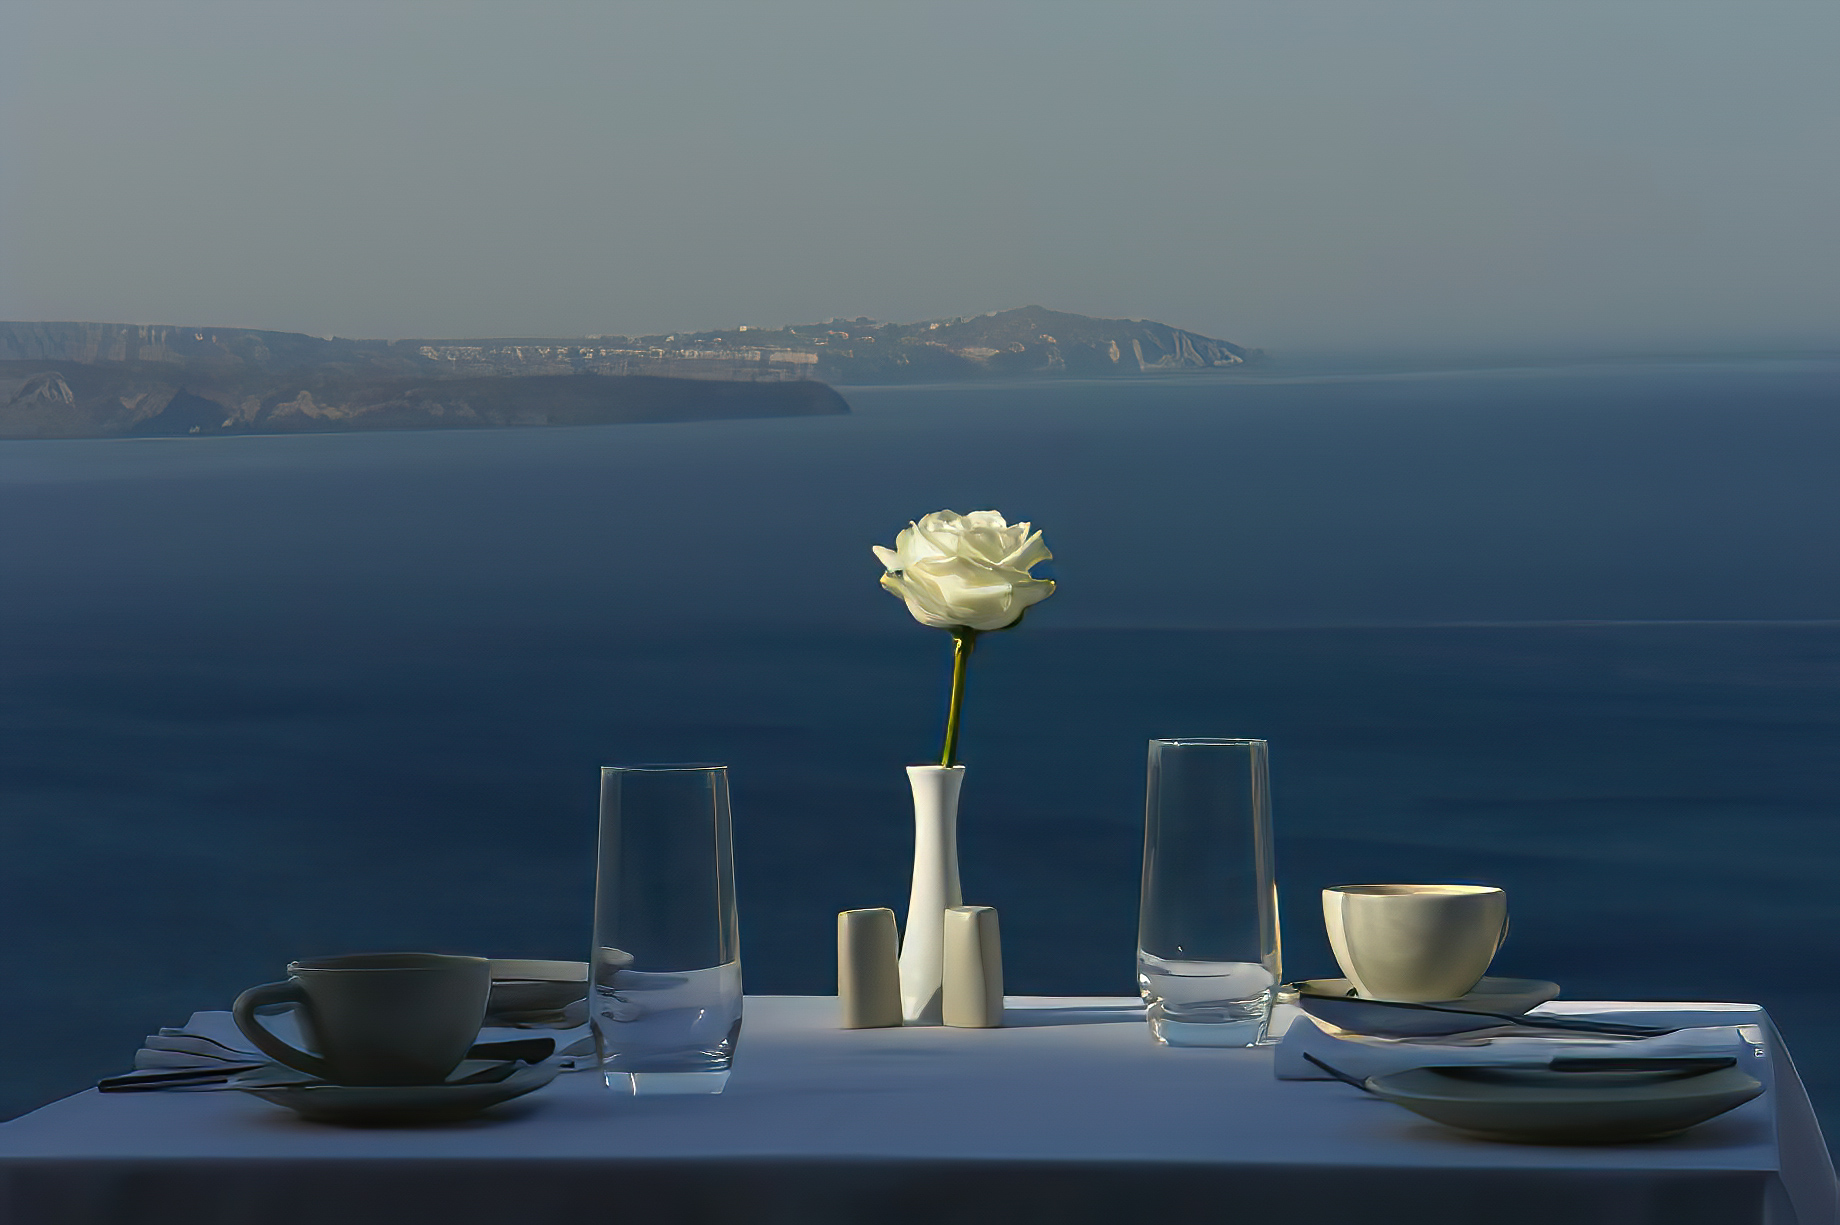 Mystique Hotel Santorini – Oia, Santorini Island, Greece - Cliffside Restaurant Table Ocean View